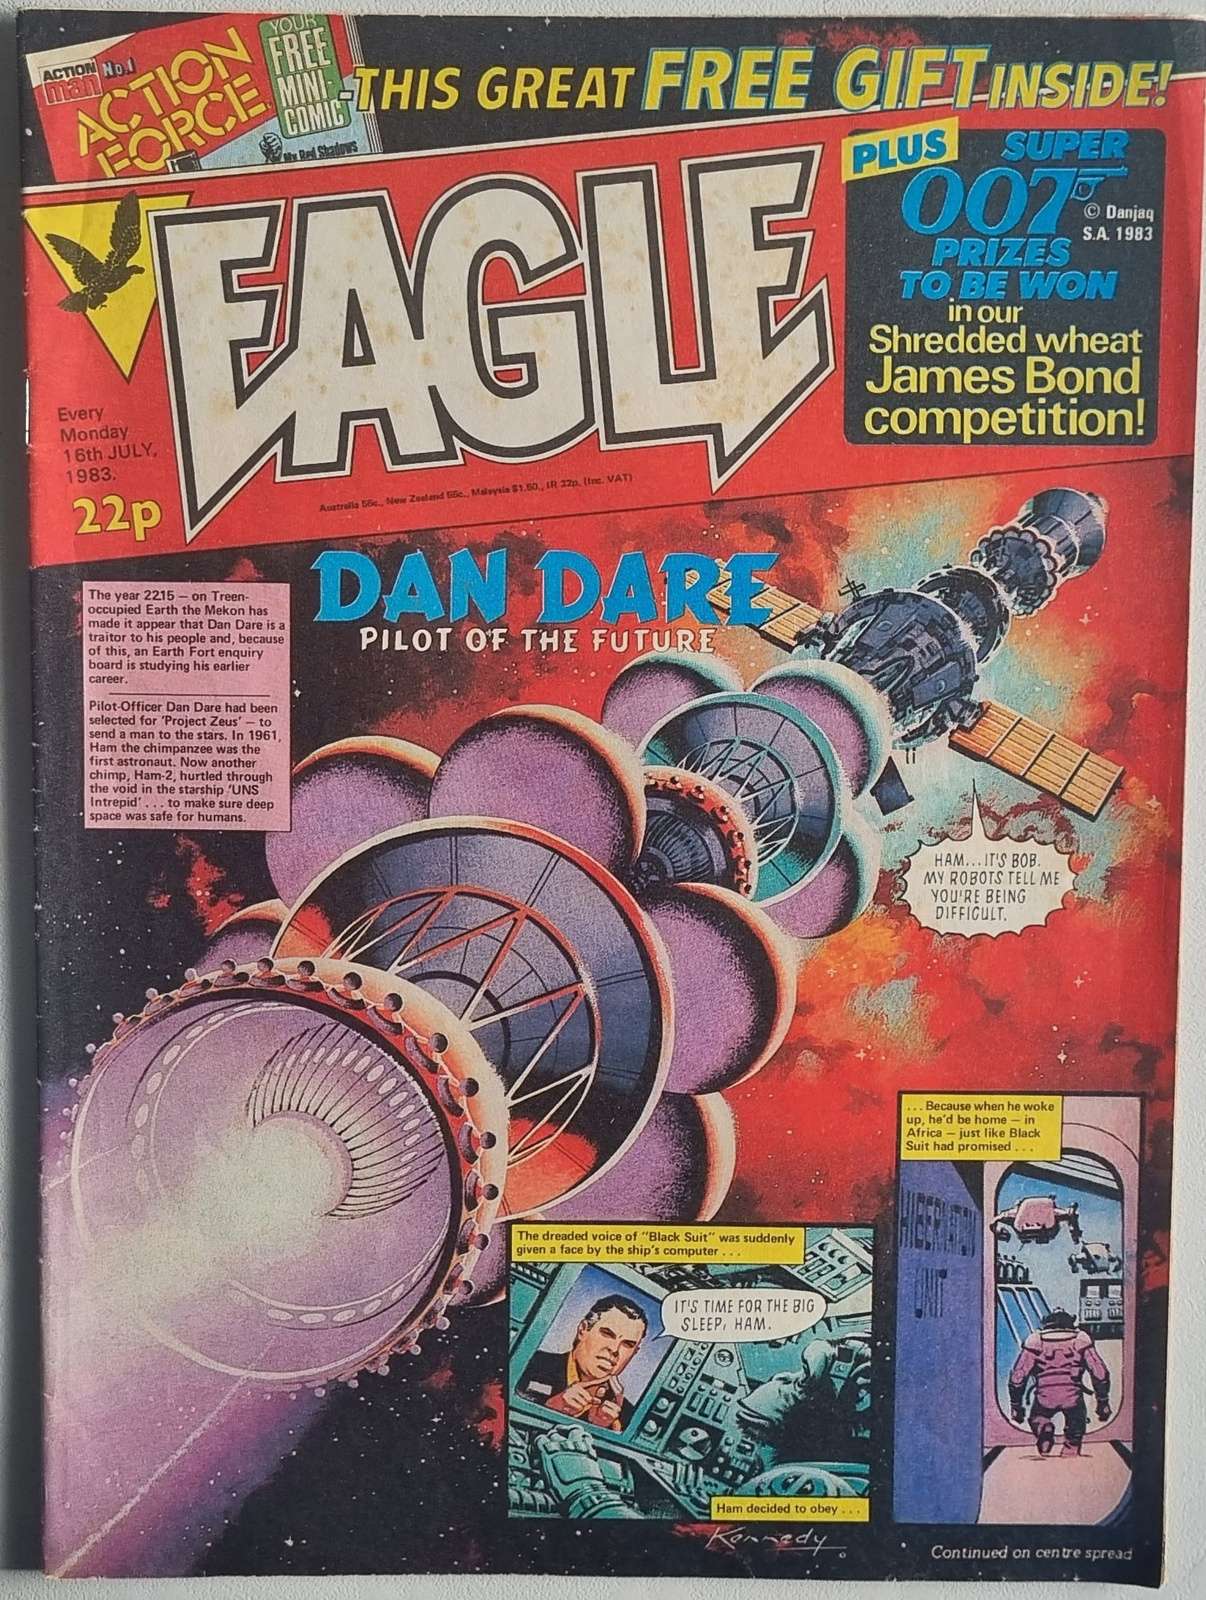 Eagle - Monday 16th July 1983